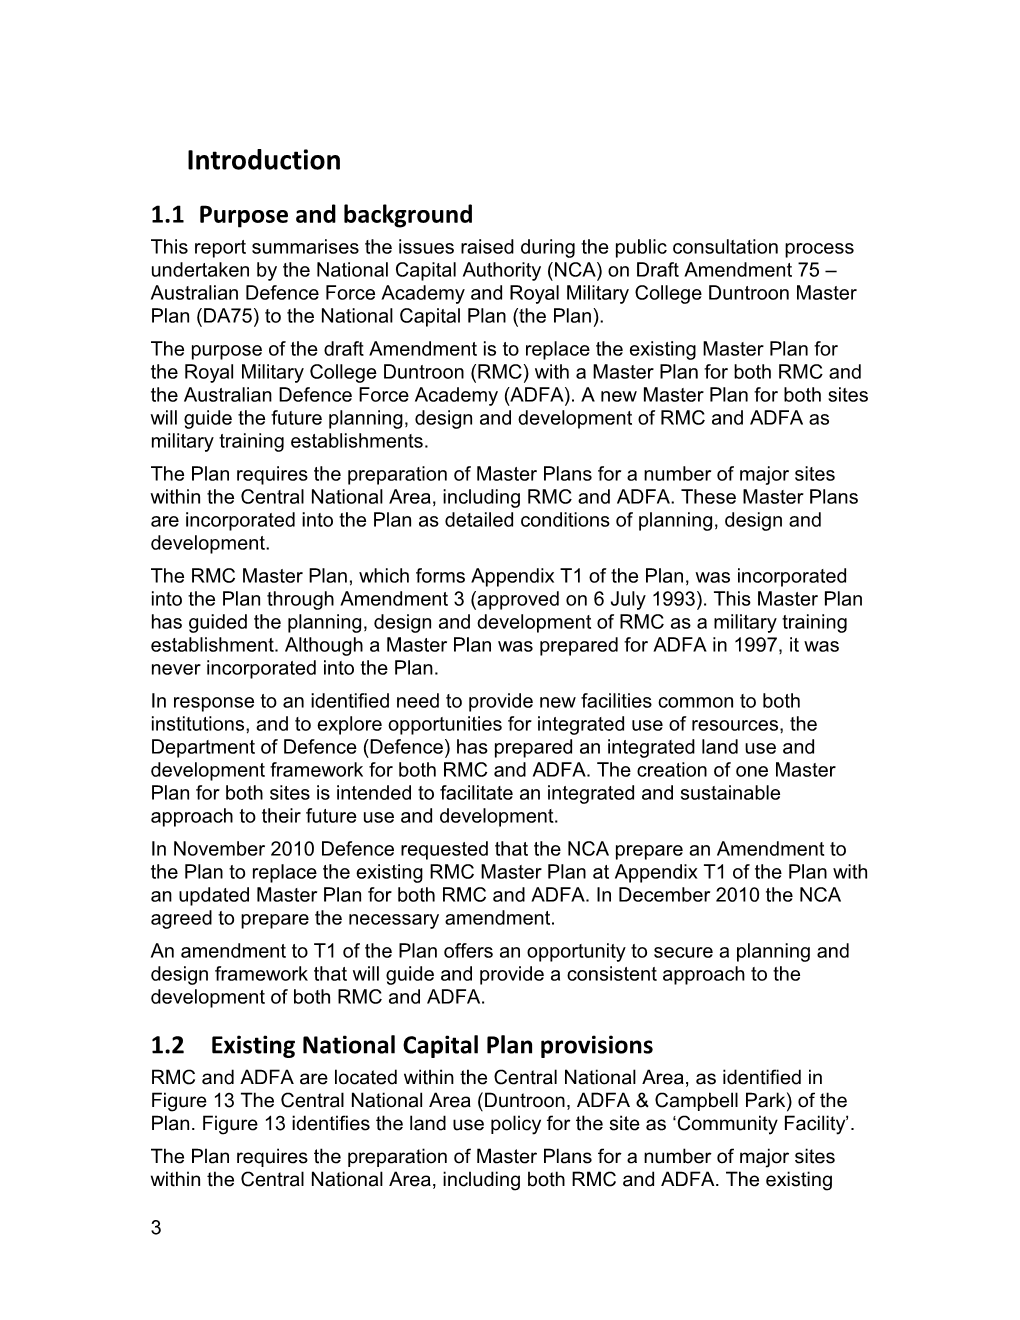 Draft Amendment 75 Australiandefenceforceacademy and Royalmilitarycollege Duntroon Master Plan